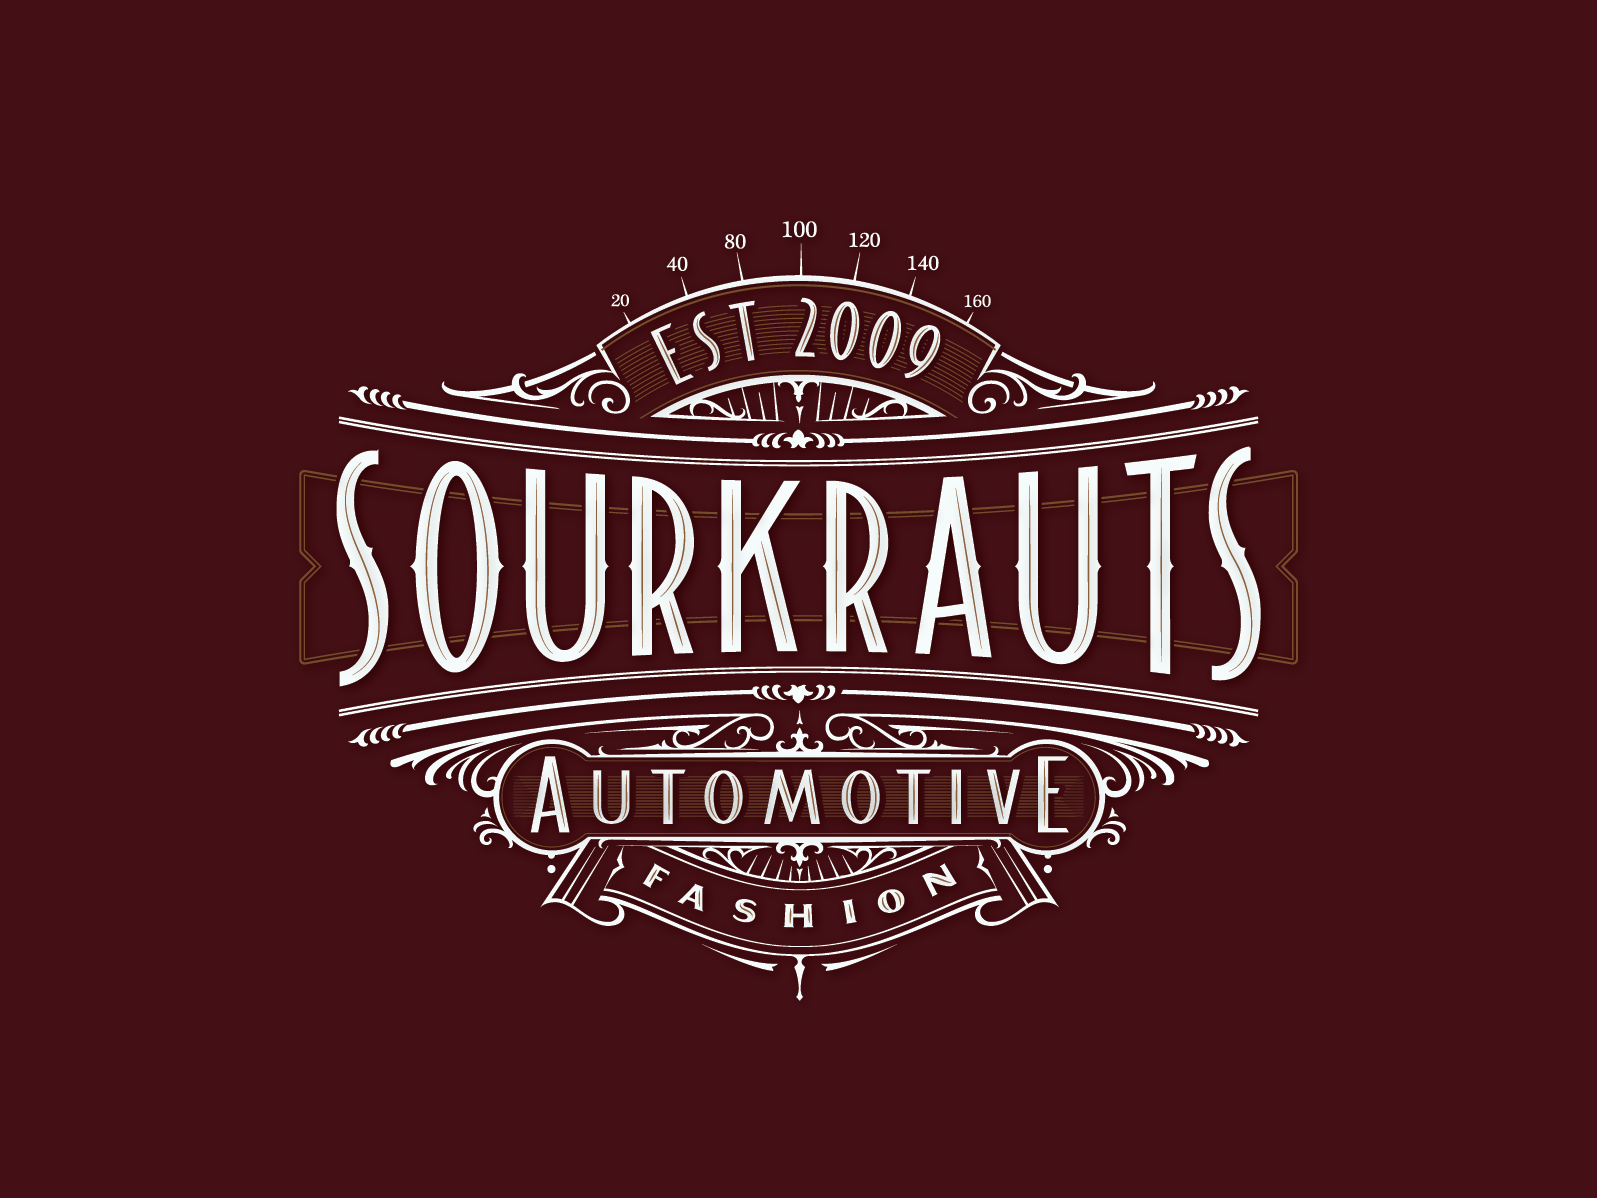 Sourkrauts 1 by Mateusz Witczak on Dribbble